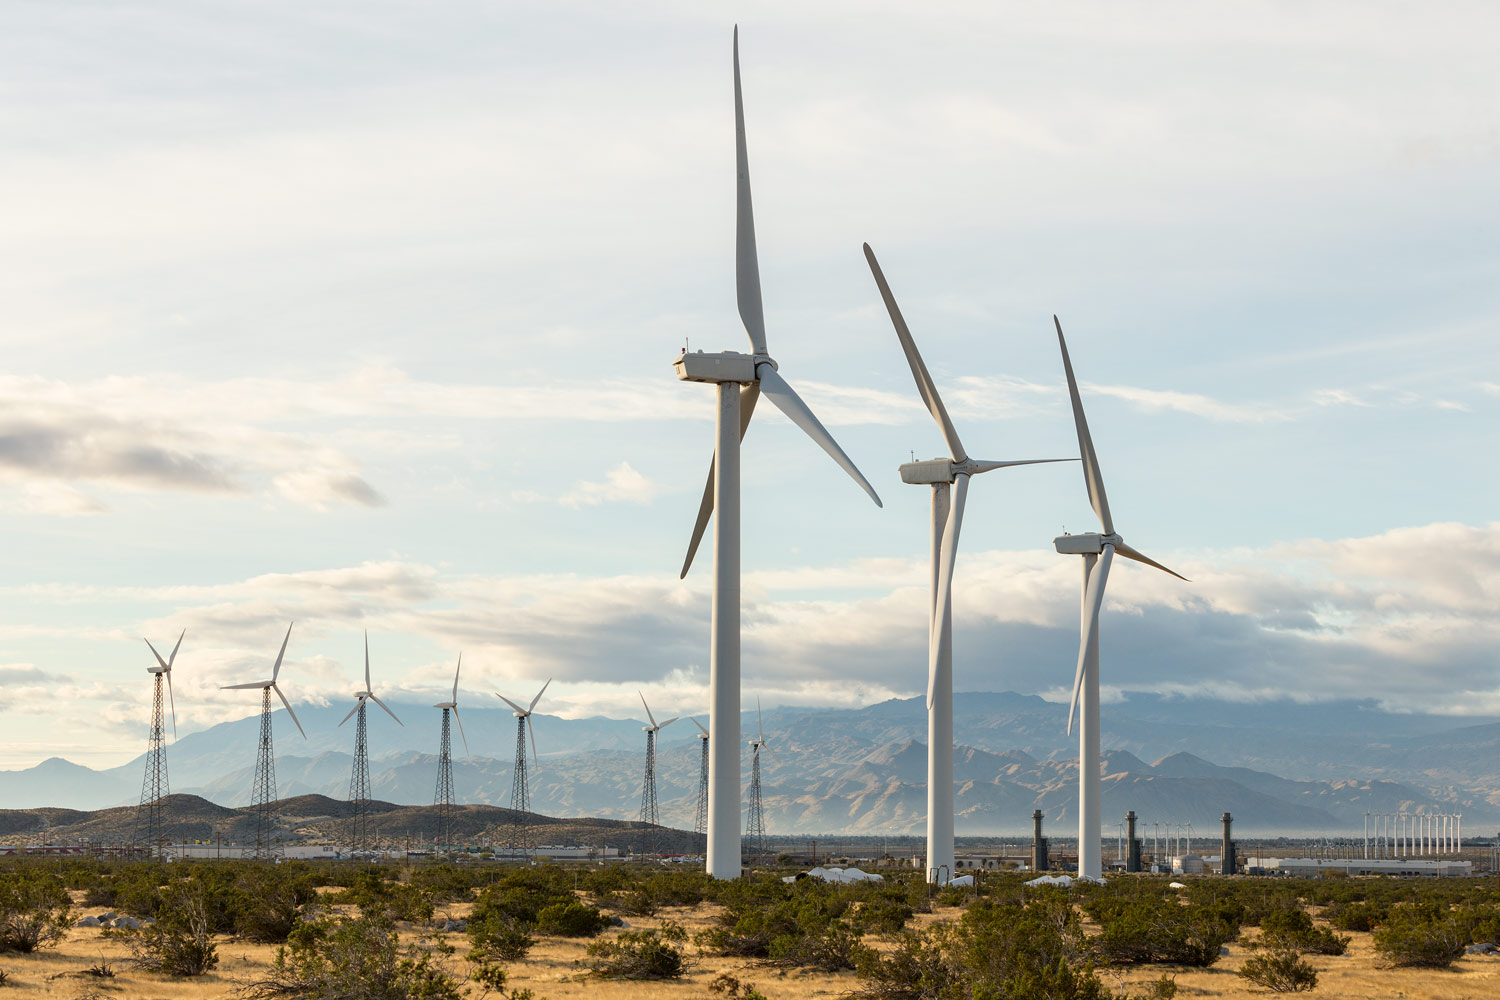  San Gorgonio Pass Wind Farm. Palm Springs, CA. Study #5. 2018 (GPS N/A)